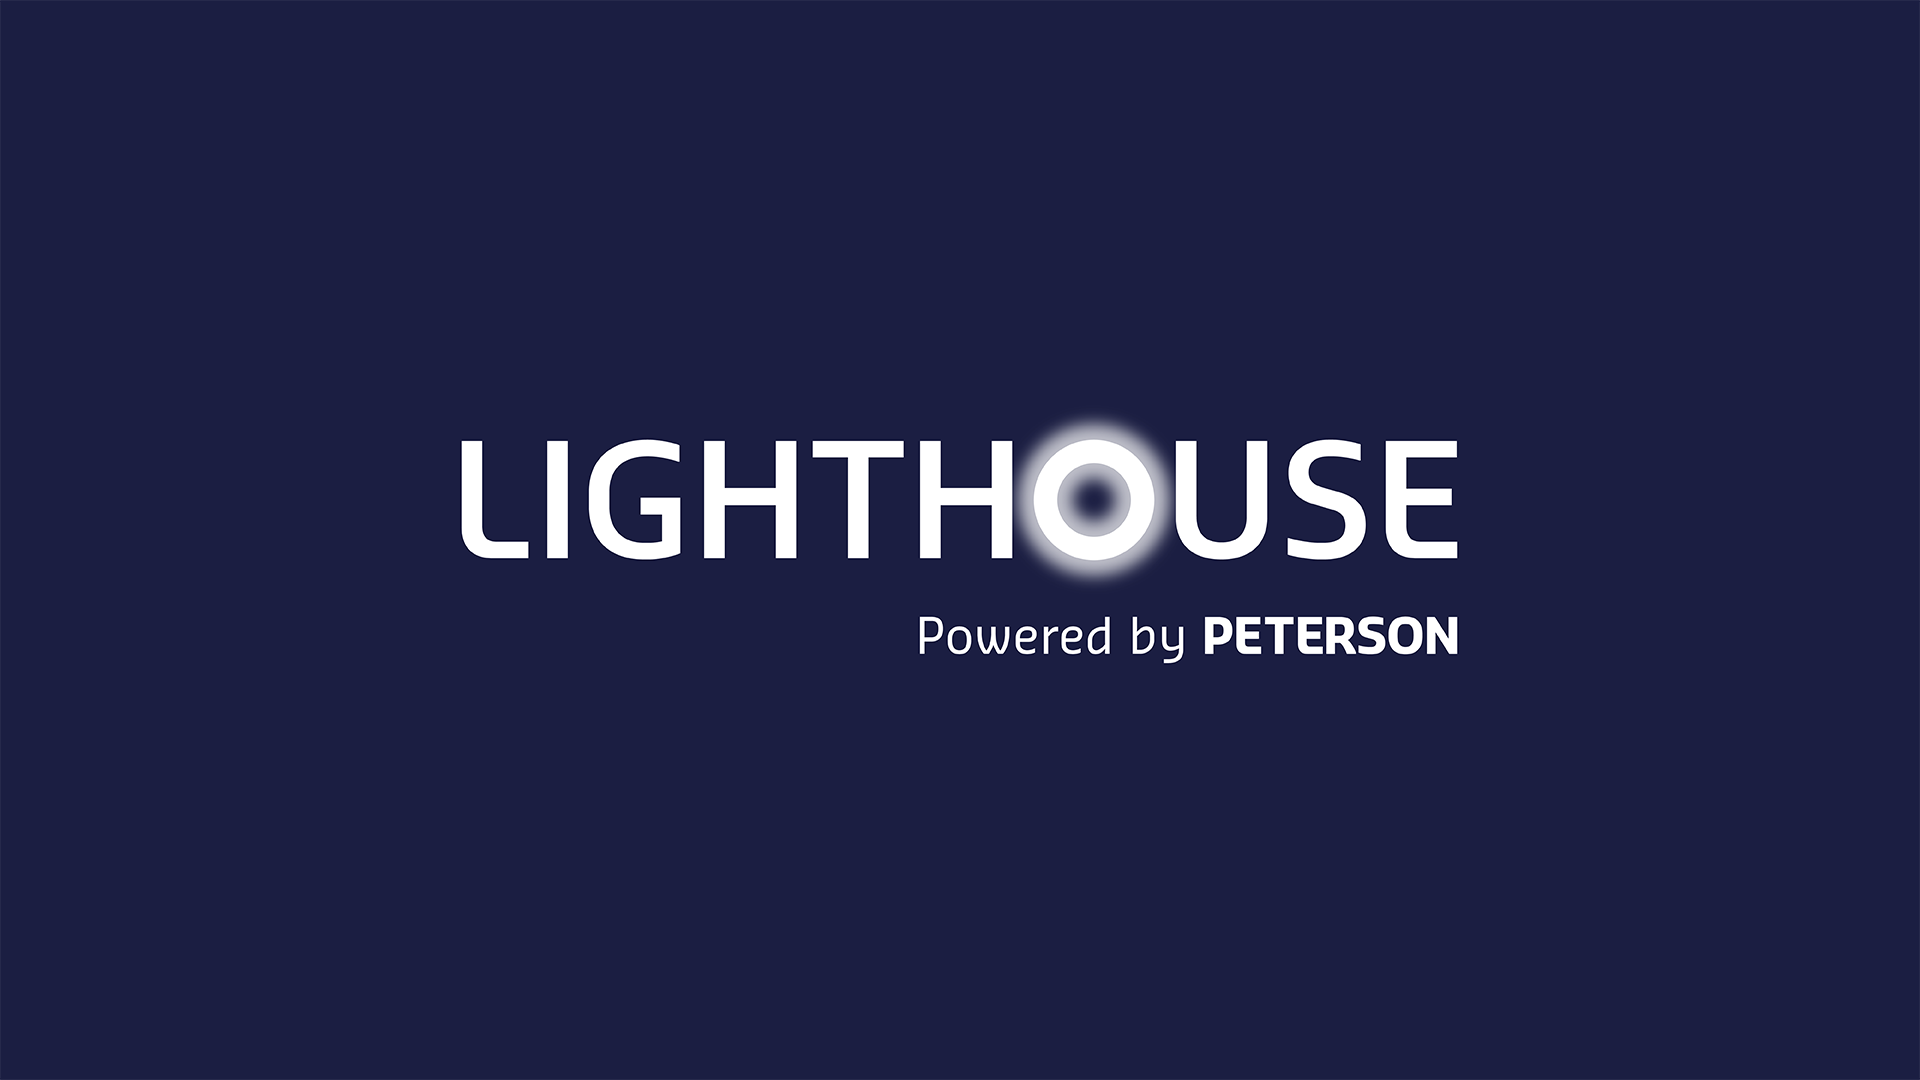 New Lighthouse website